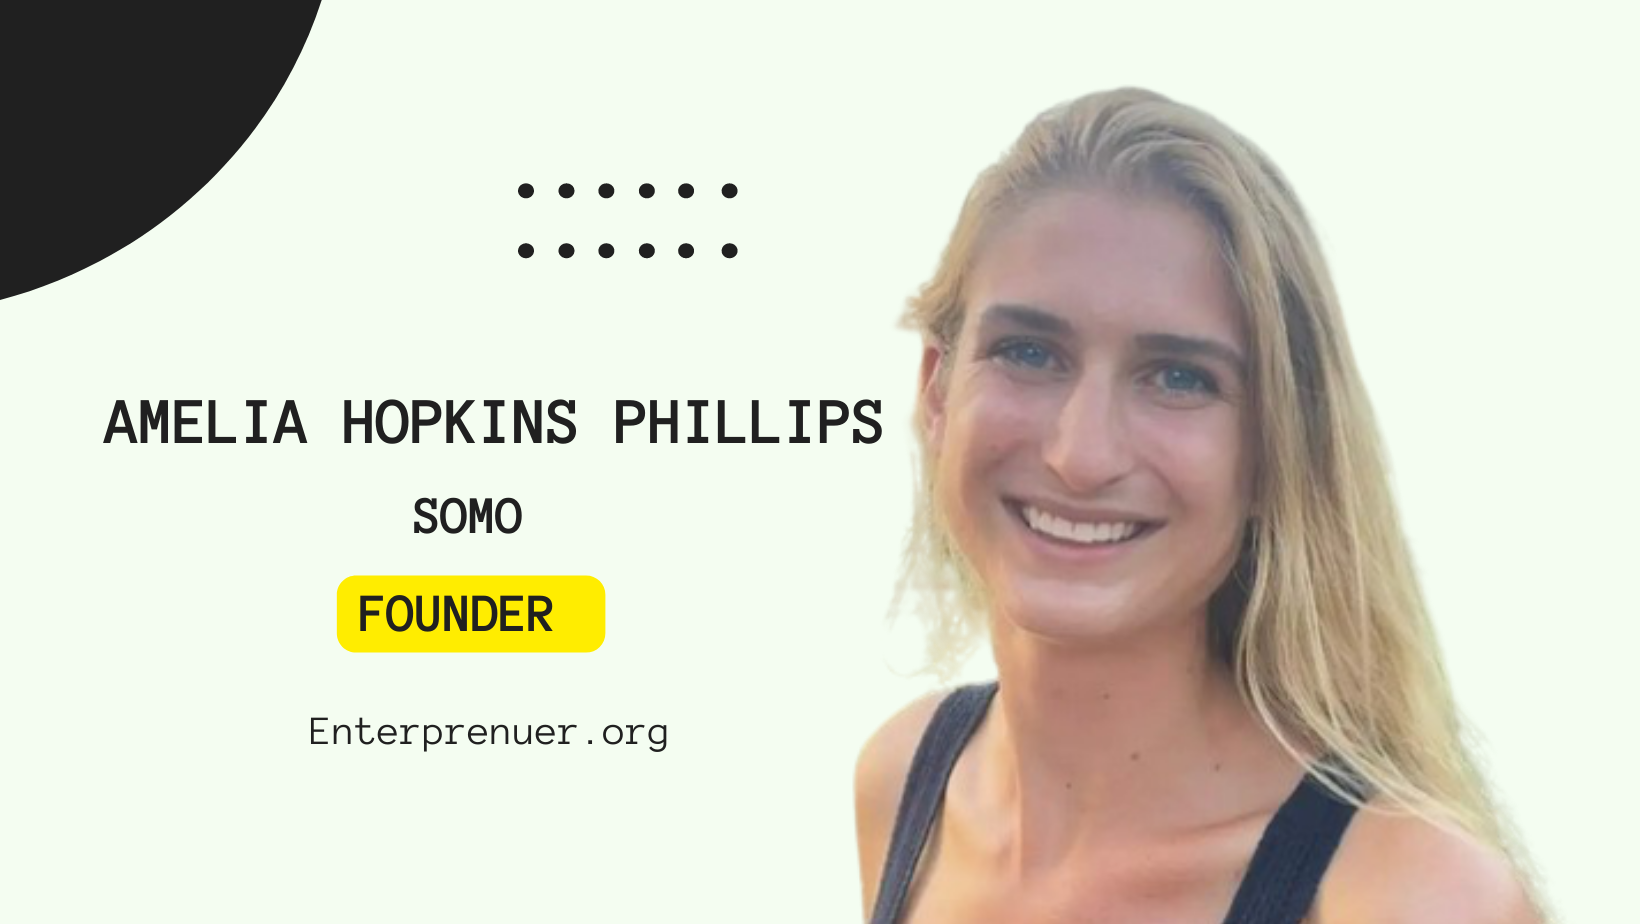 Amelia Hopkins Phillips Founder of Somo